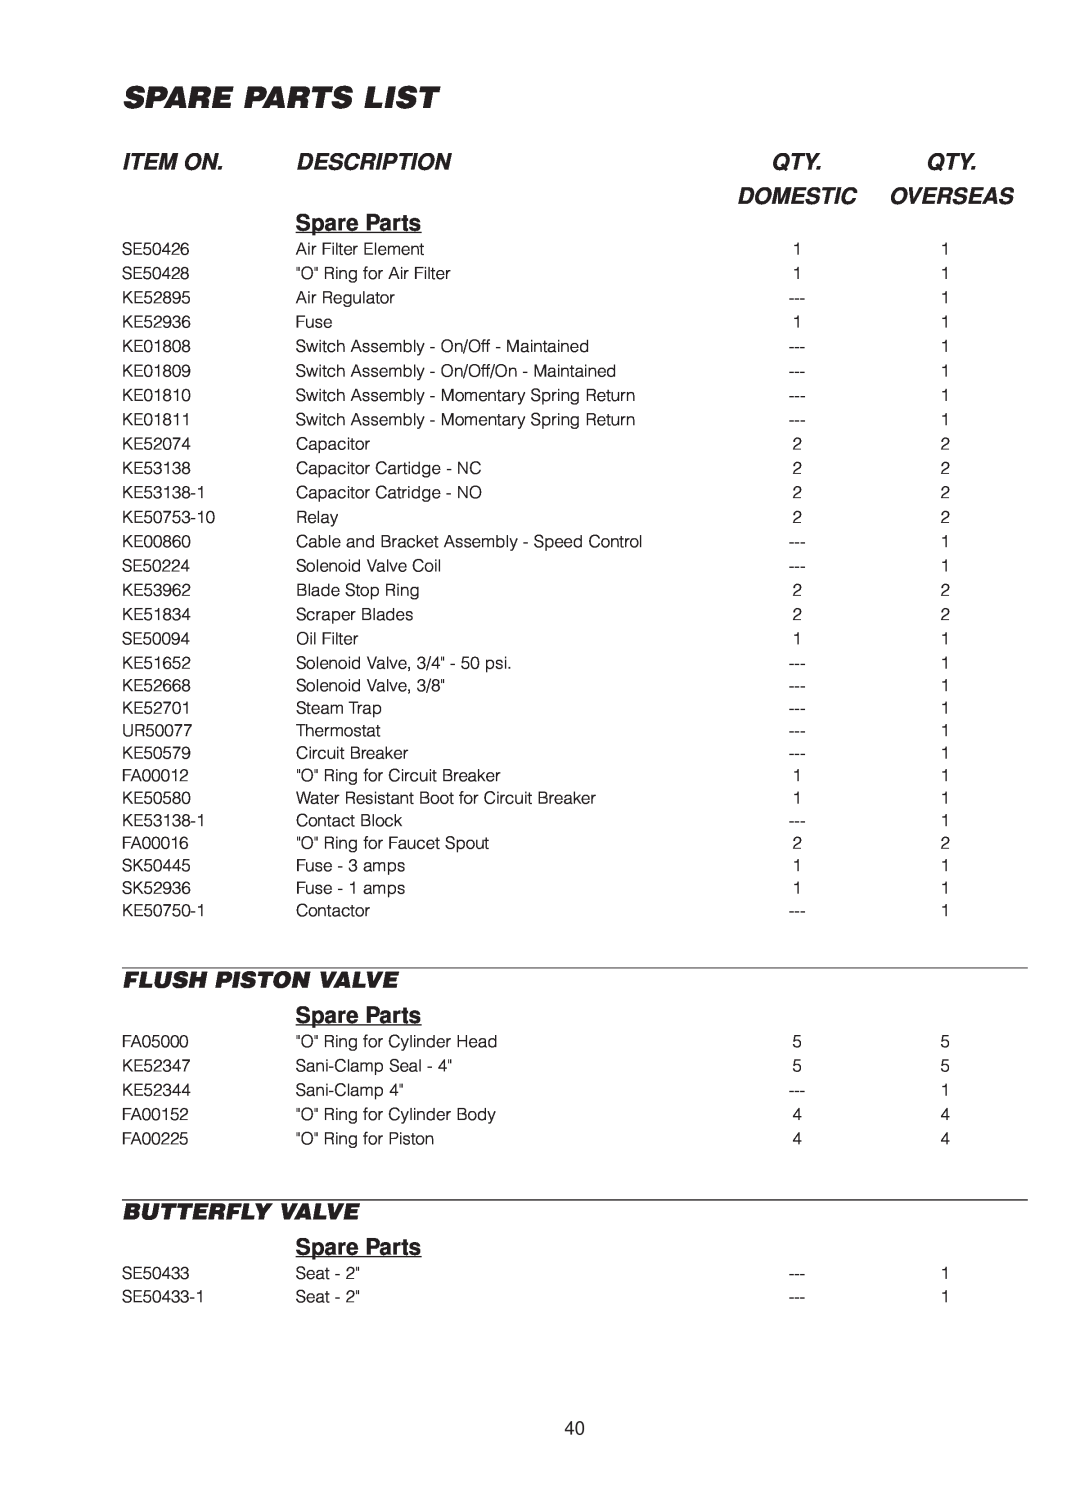 Cleveland Range MKDL-80-CC Spare Parts List, Item On, Flush Piston Valve, Butterfly Valve, Domestic, Overseas, Description 